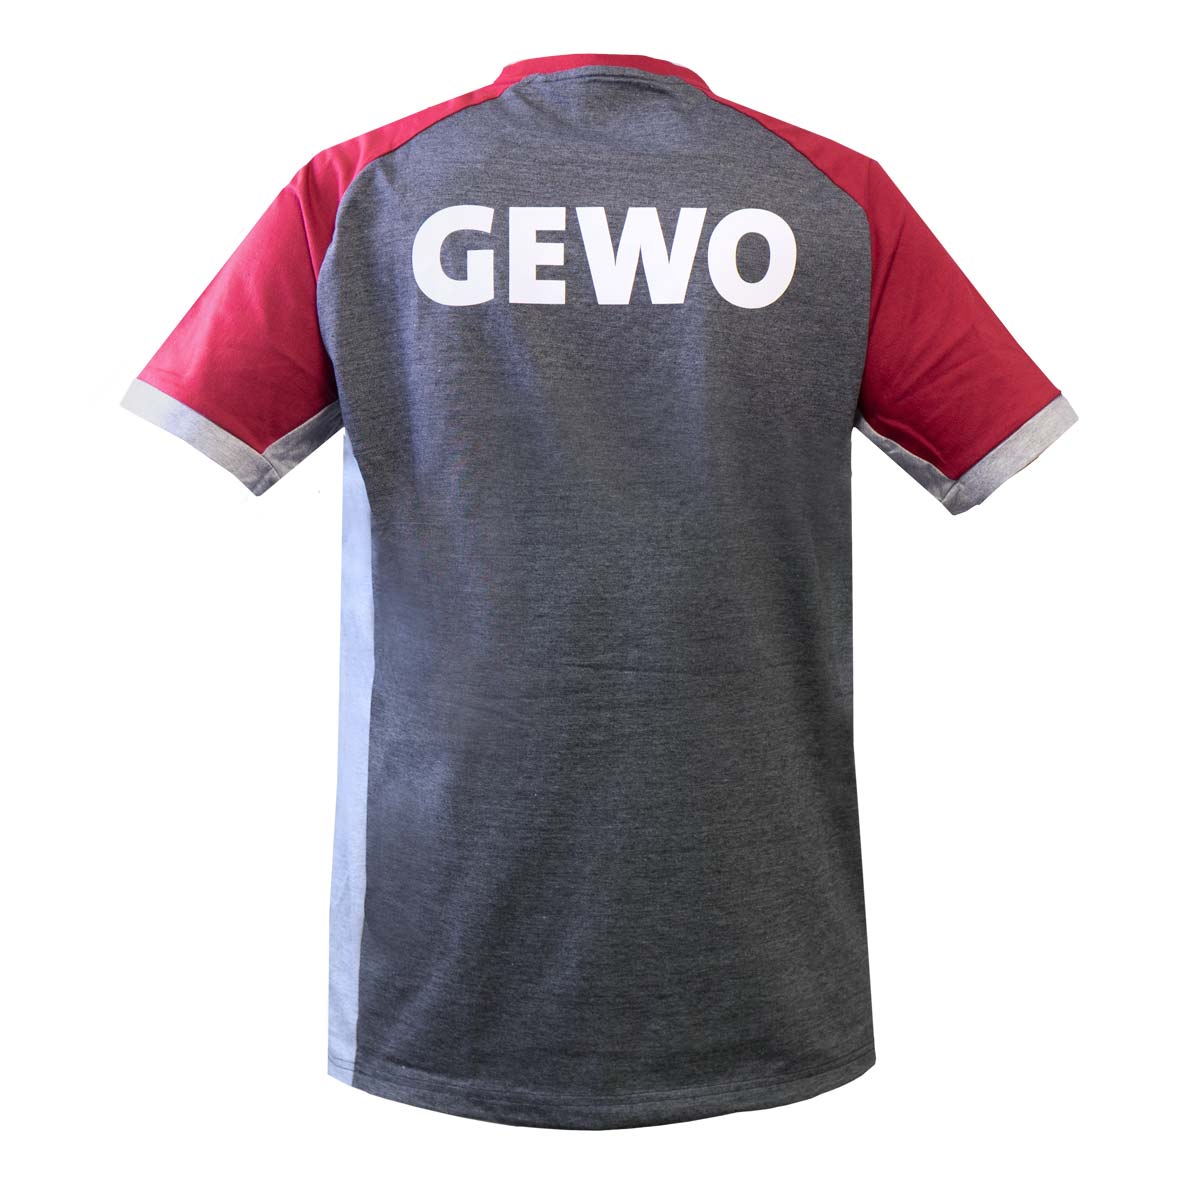 GEWO Baumwoll-Promo T-Shirt Fermo schwarz/bordeaux XXL